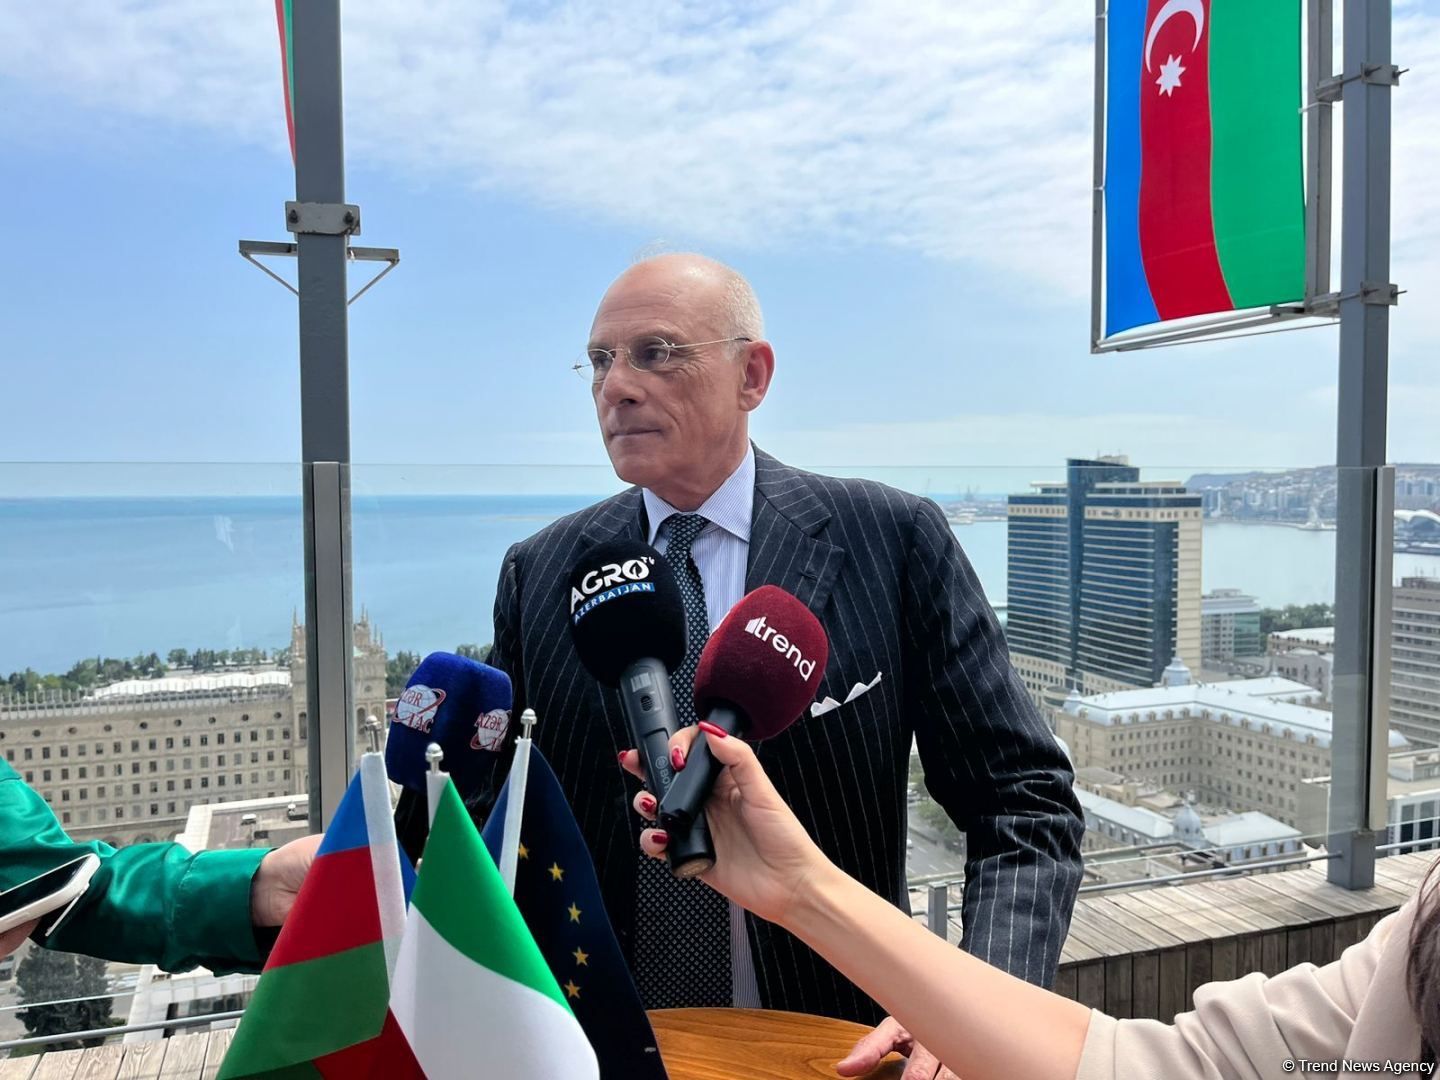 Italian-Azerbaijani relations developing at high level in many areas - ambassador Claudio Taffuri